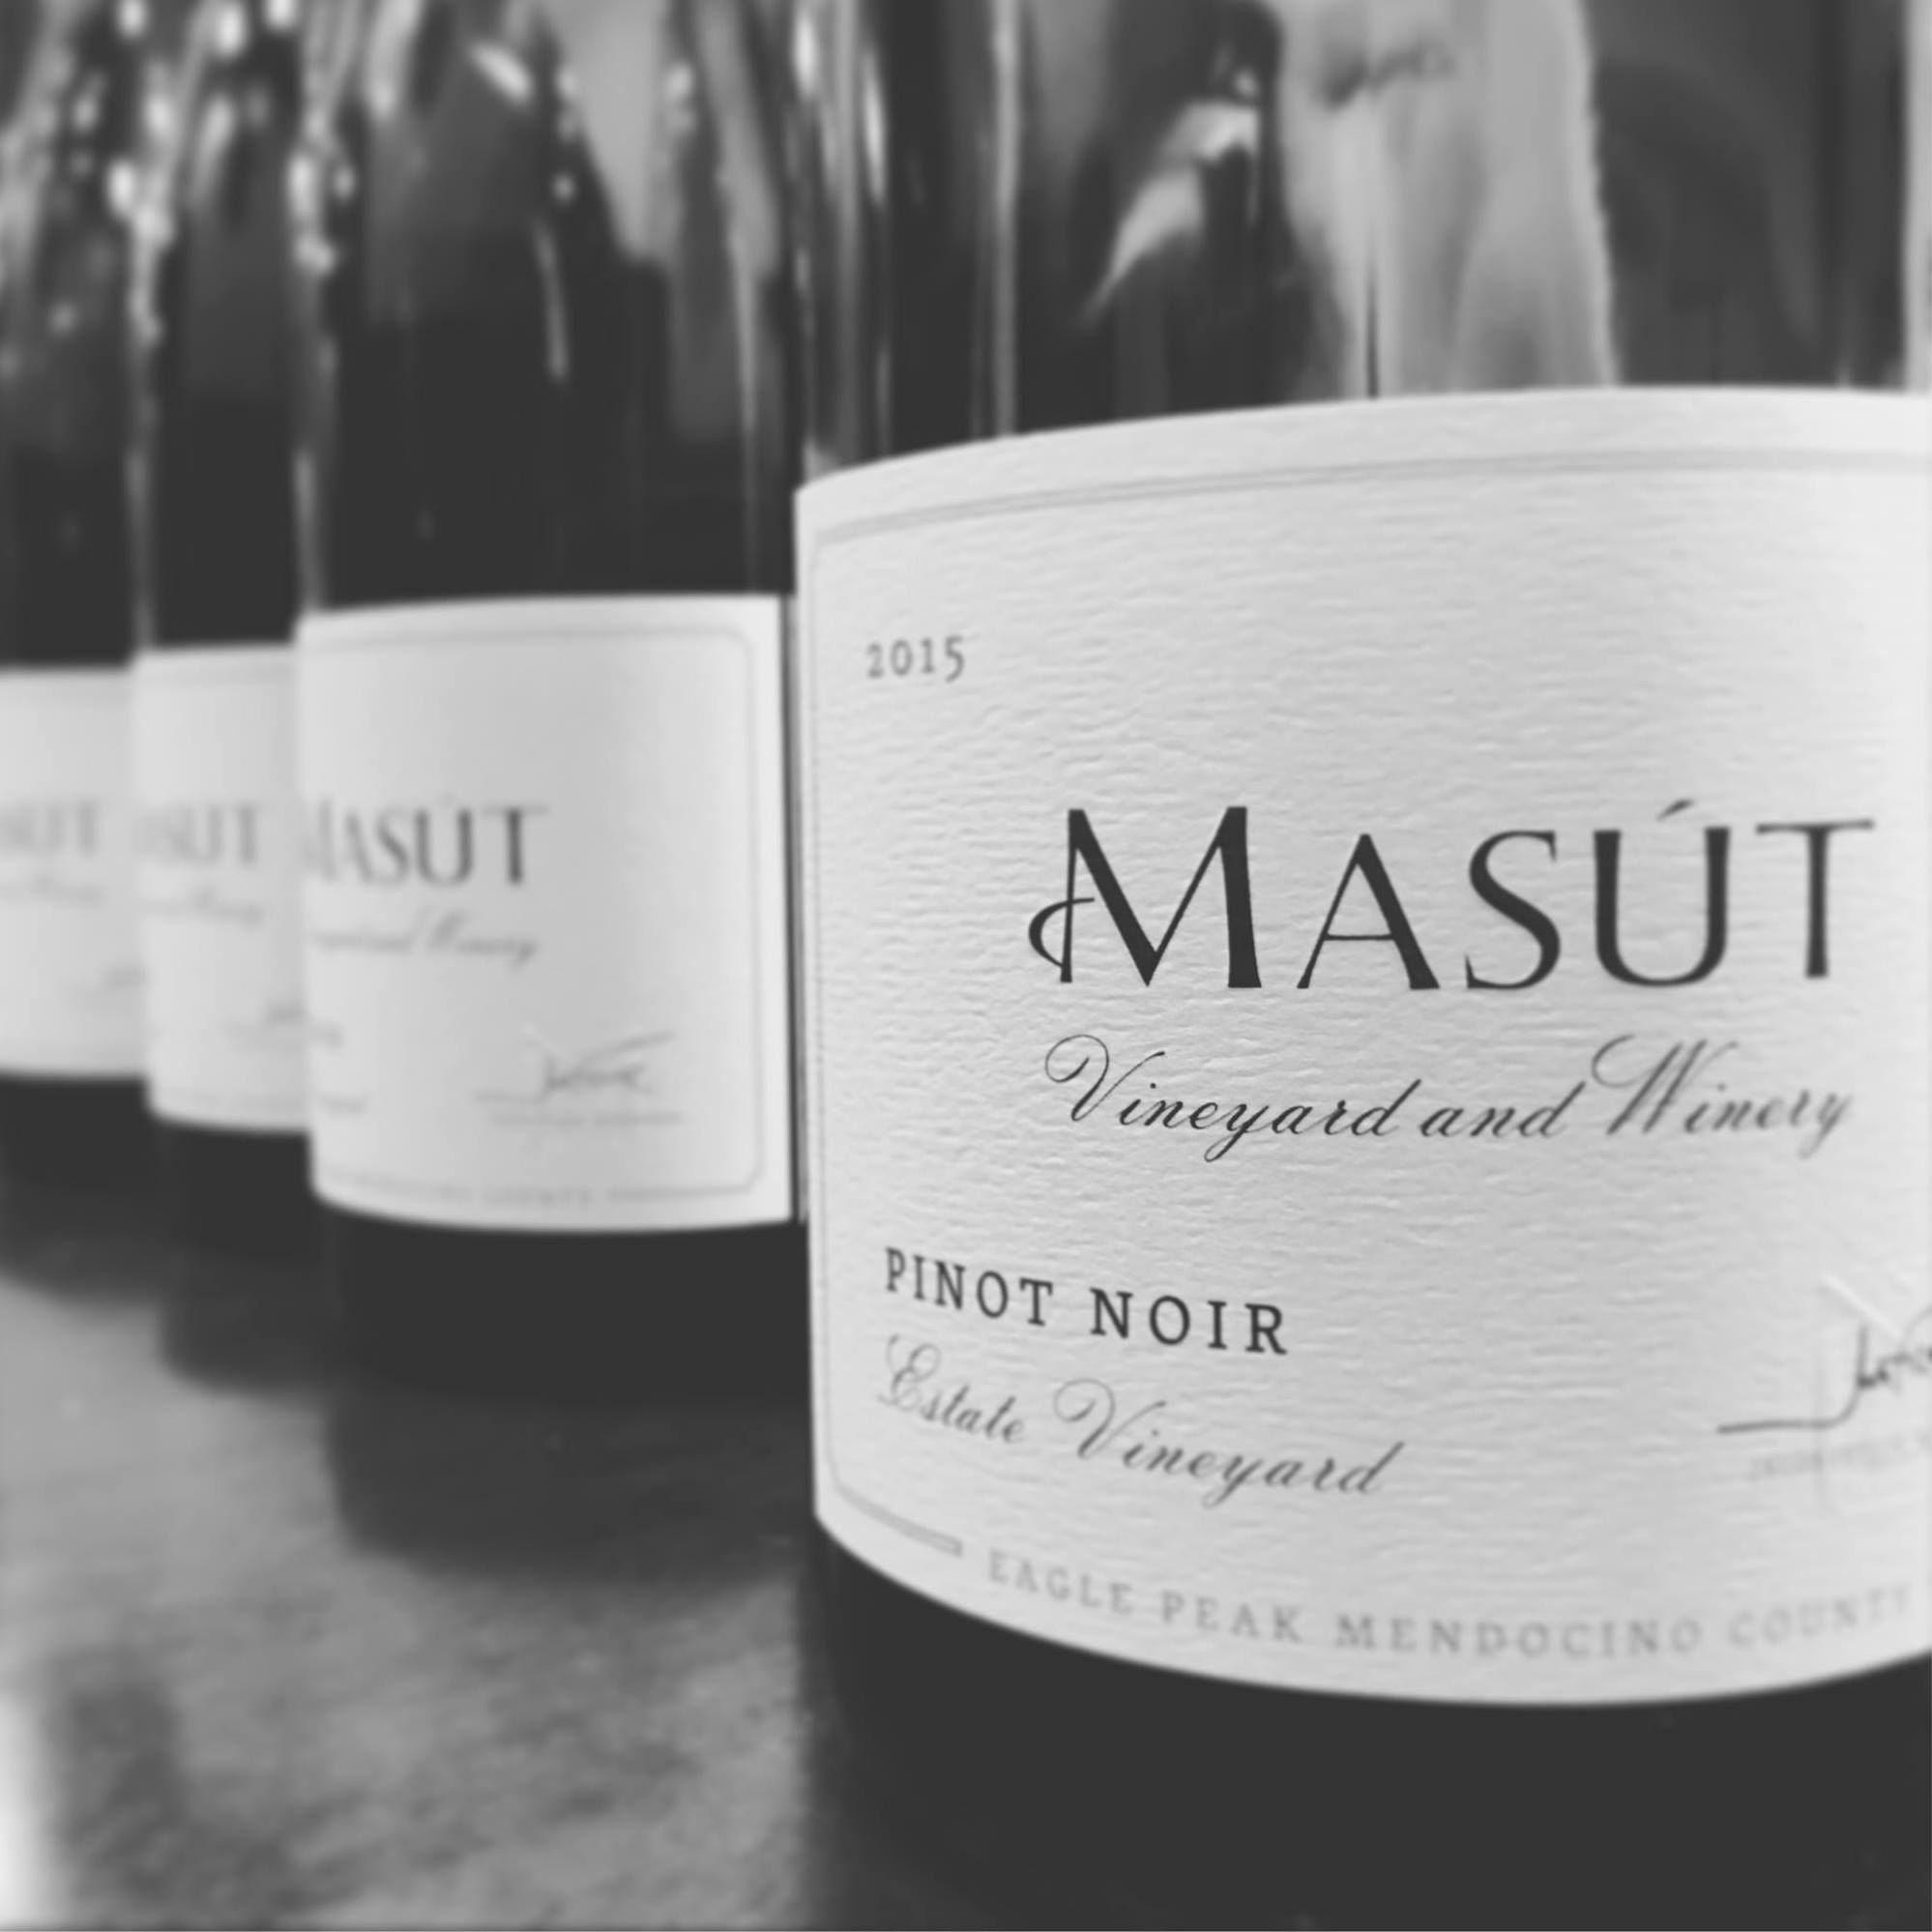 Masút Vineyard and Winery